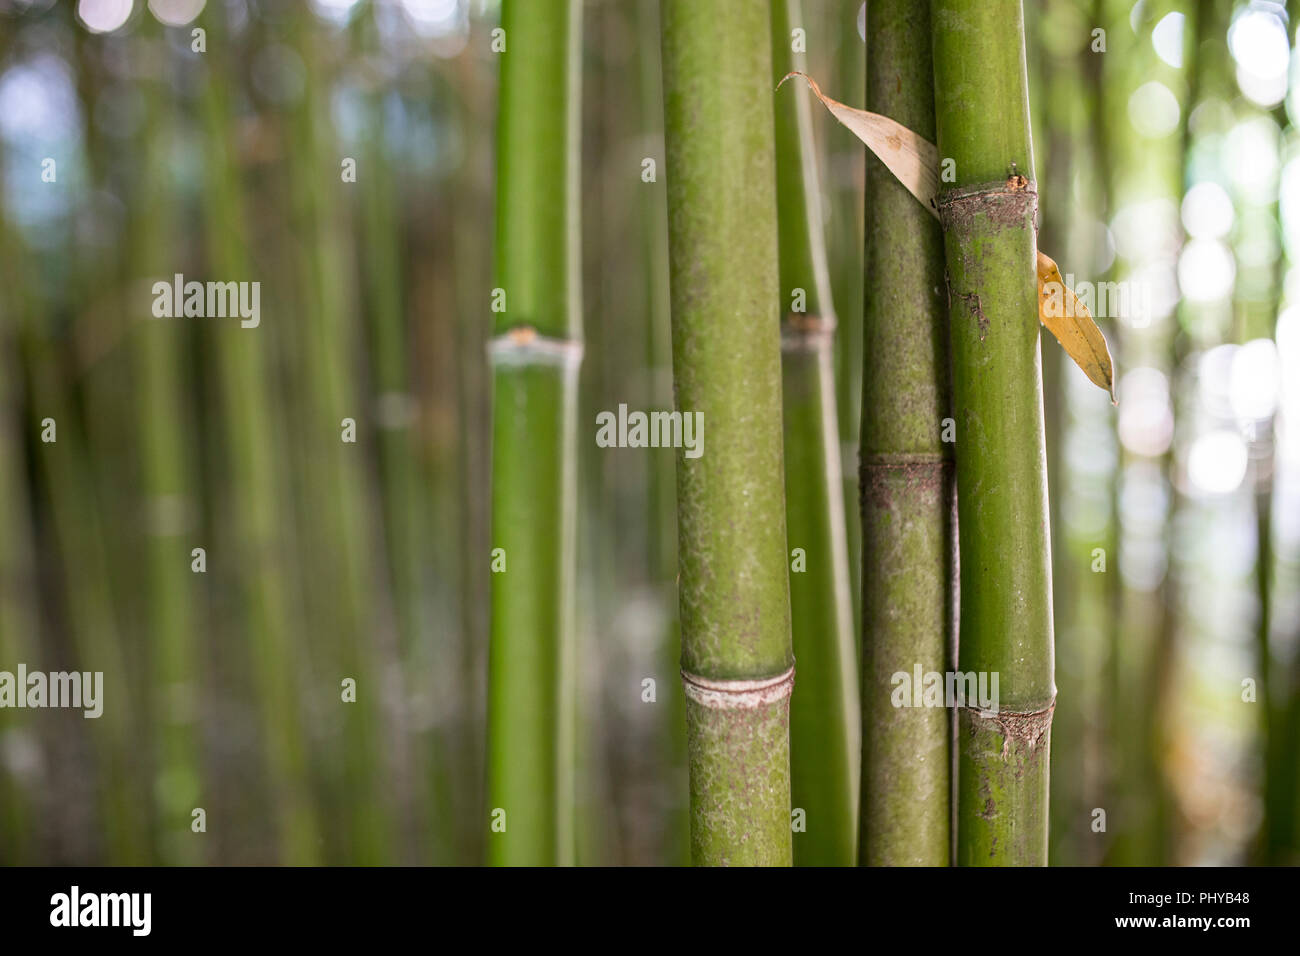 Bamboo garden. Bamboo forest natural green background. Selective focus Stock Photo